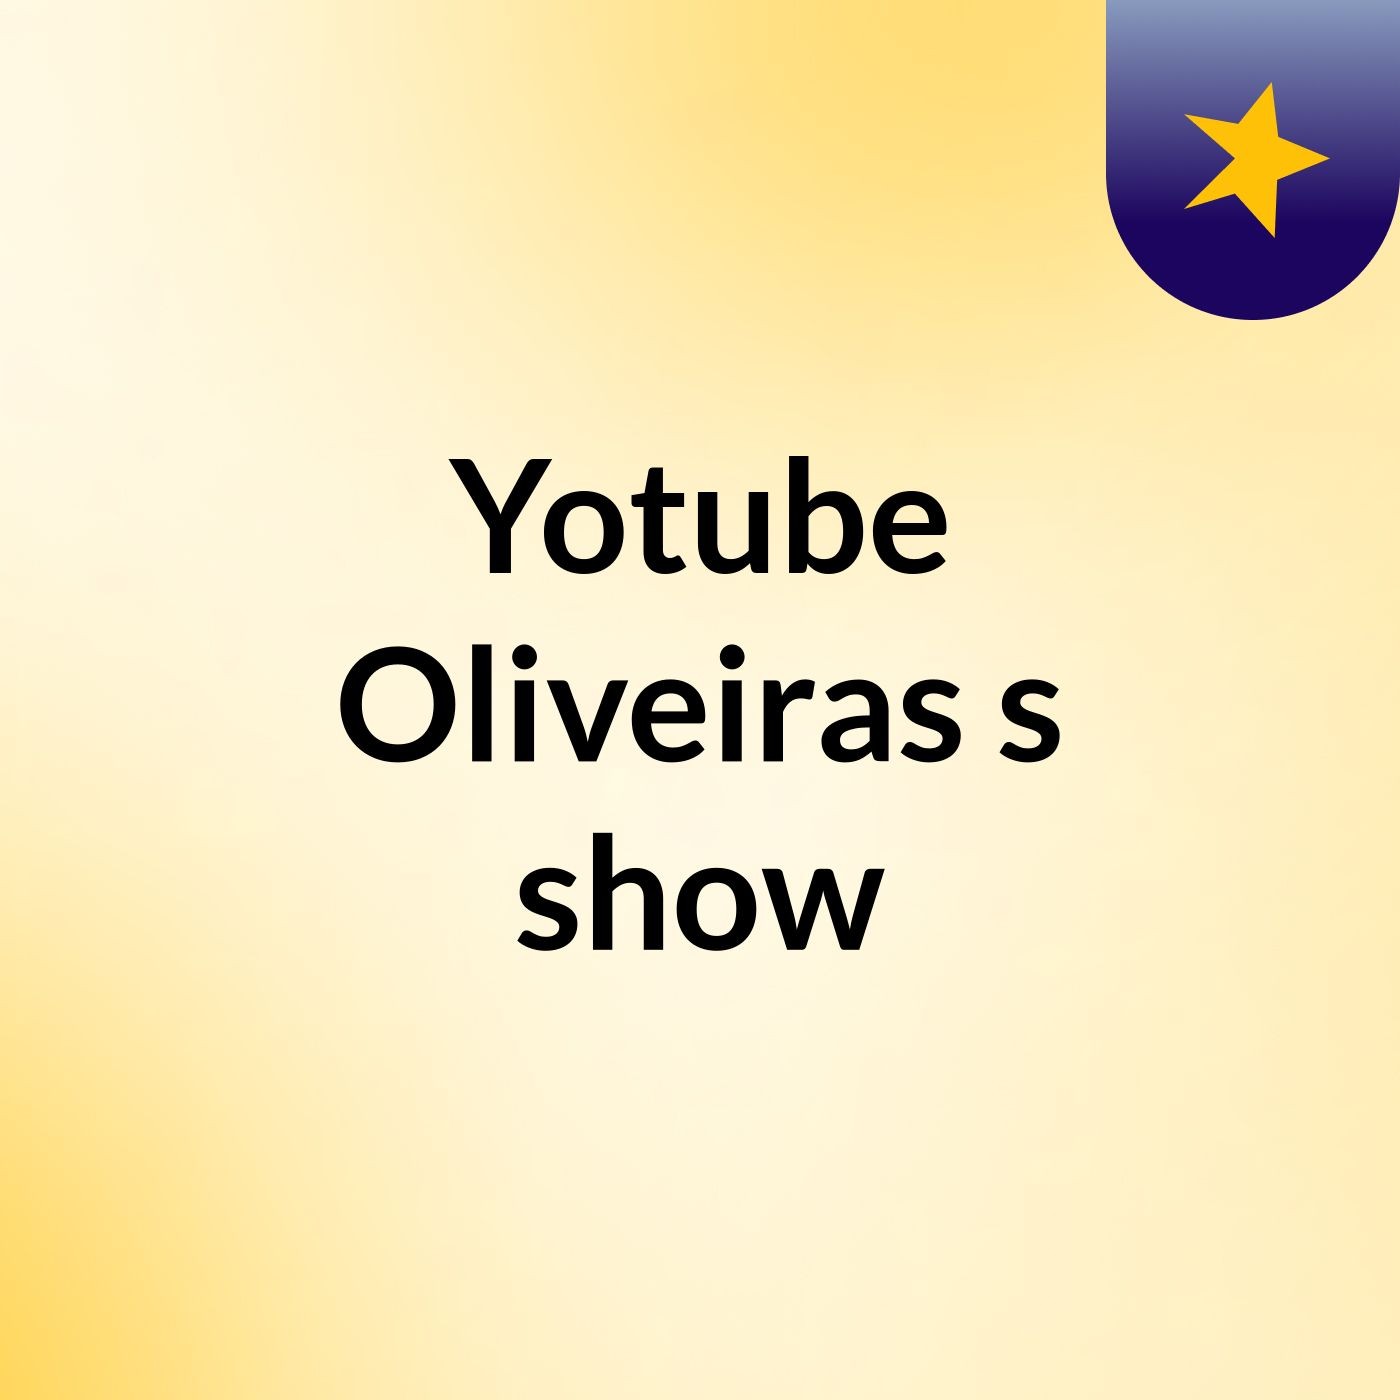 Yotube Oliveiras's show